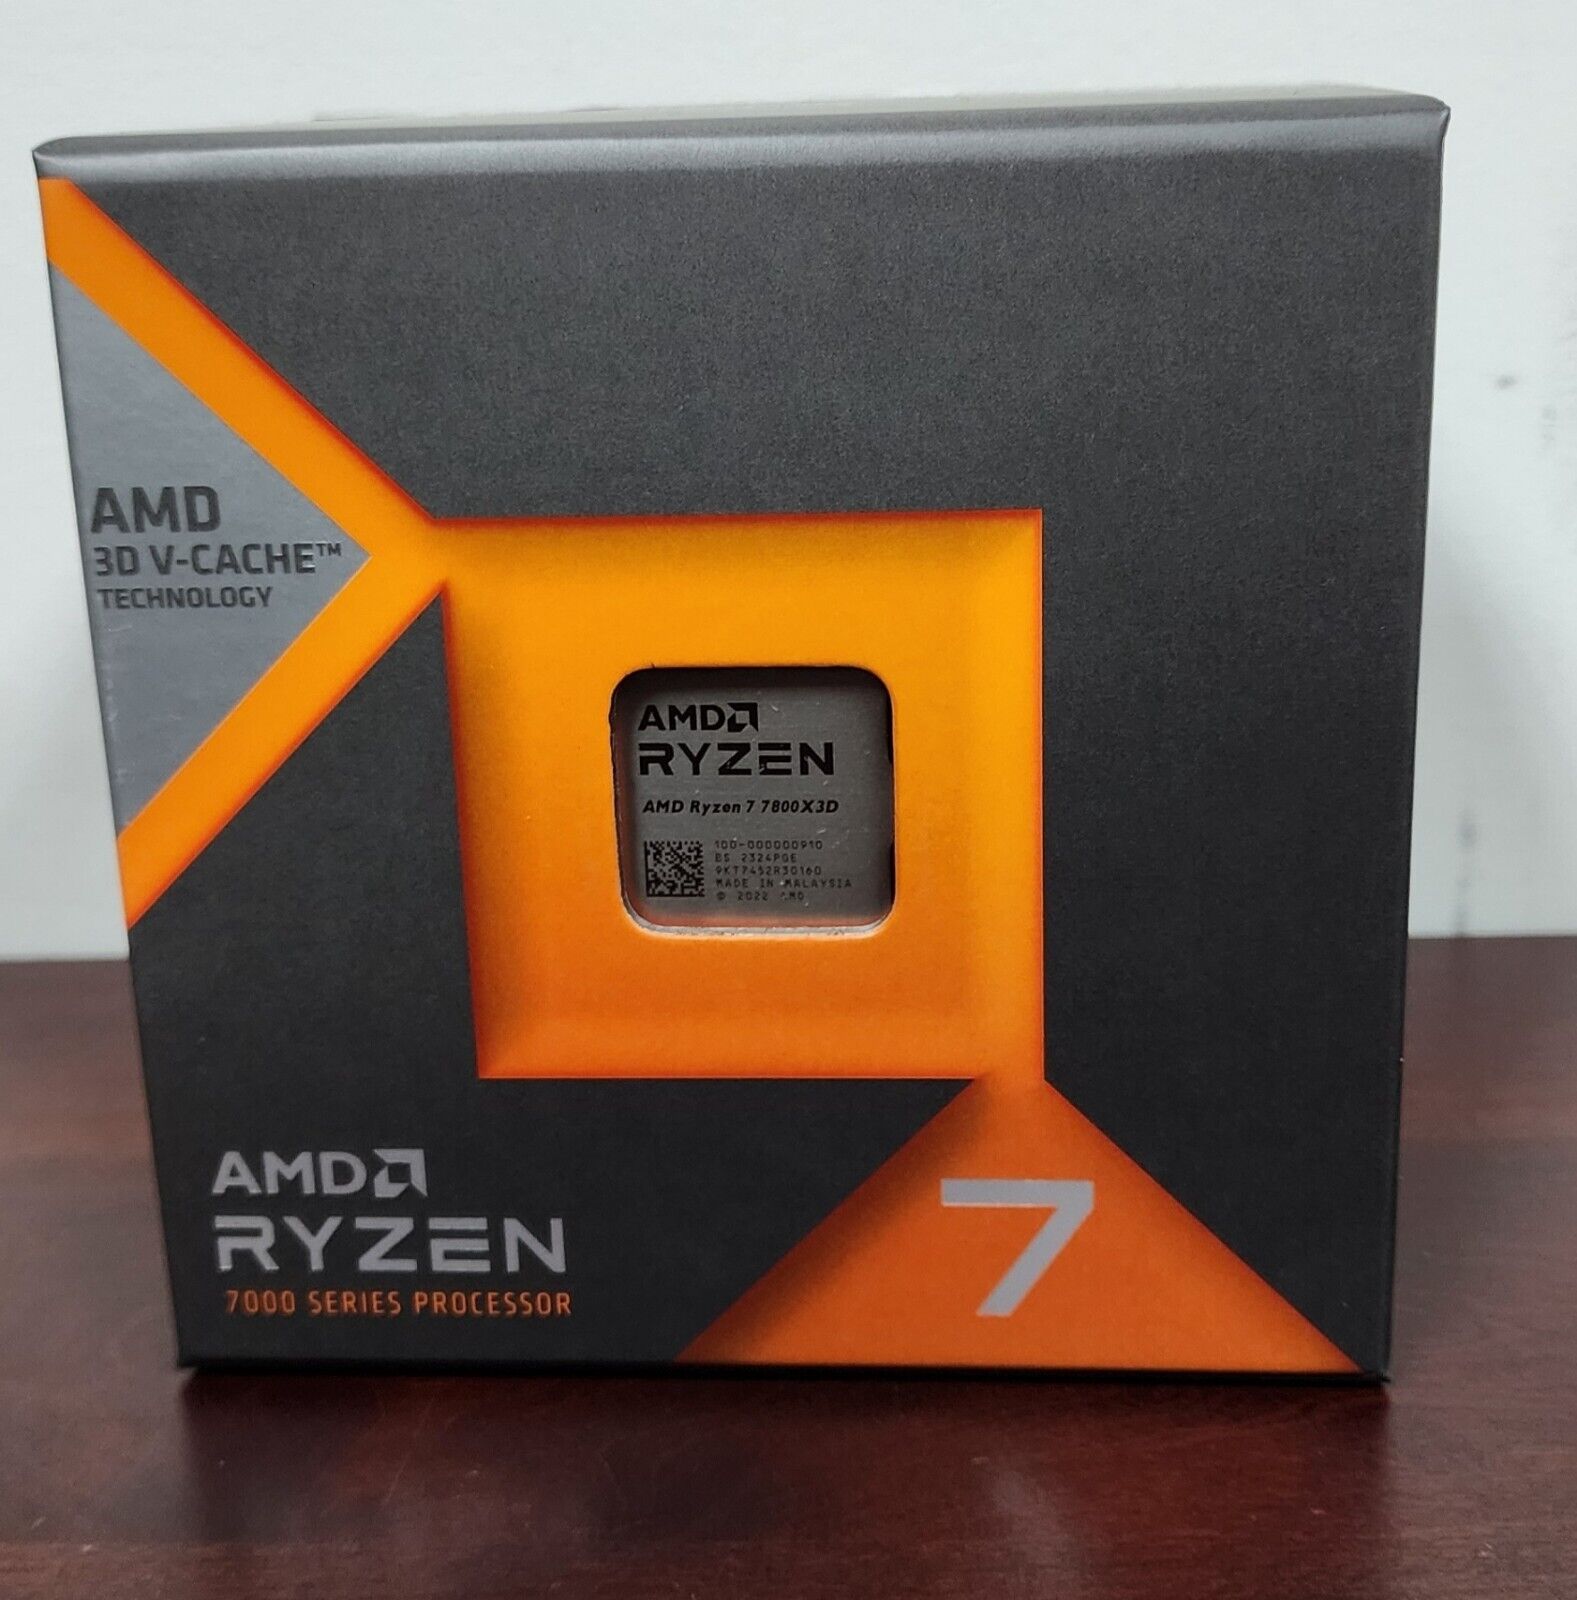 AMD Ryzen 7 7800X3D 4.2GHz 8-Core, 16-Thread Gaming Desktop Processor